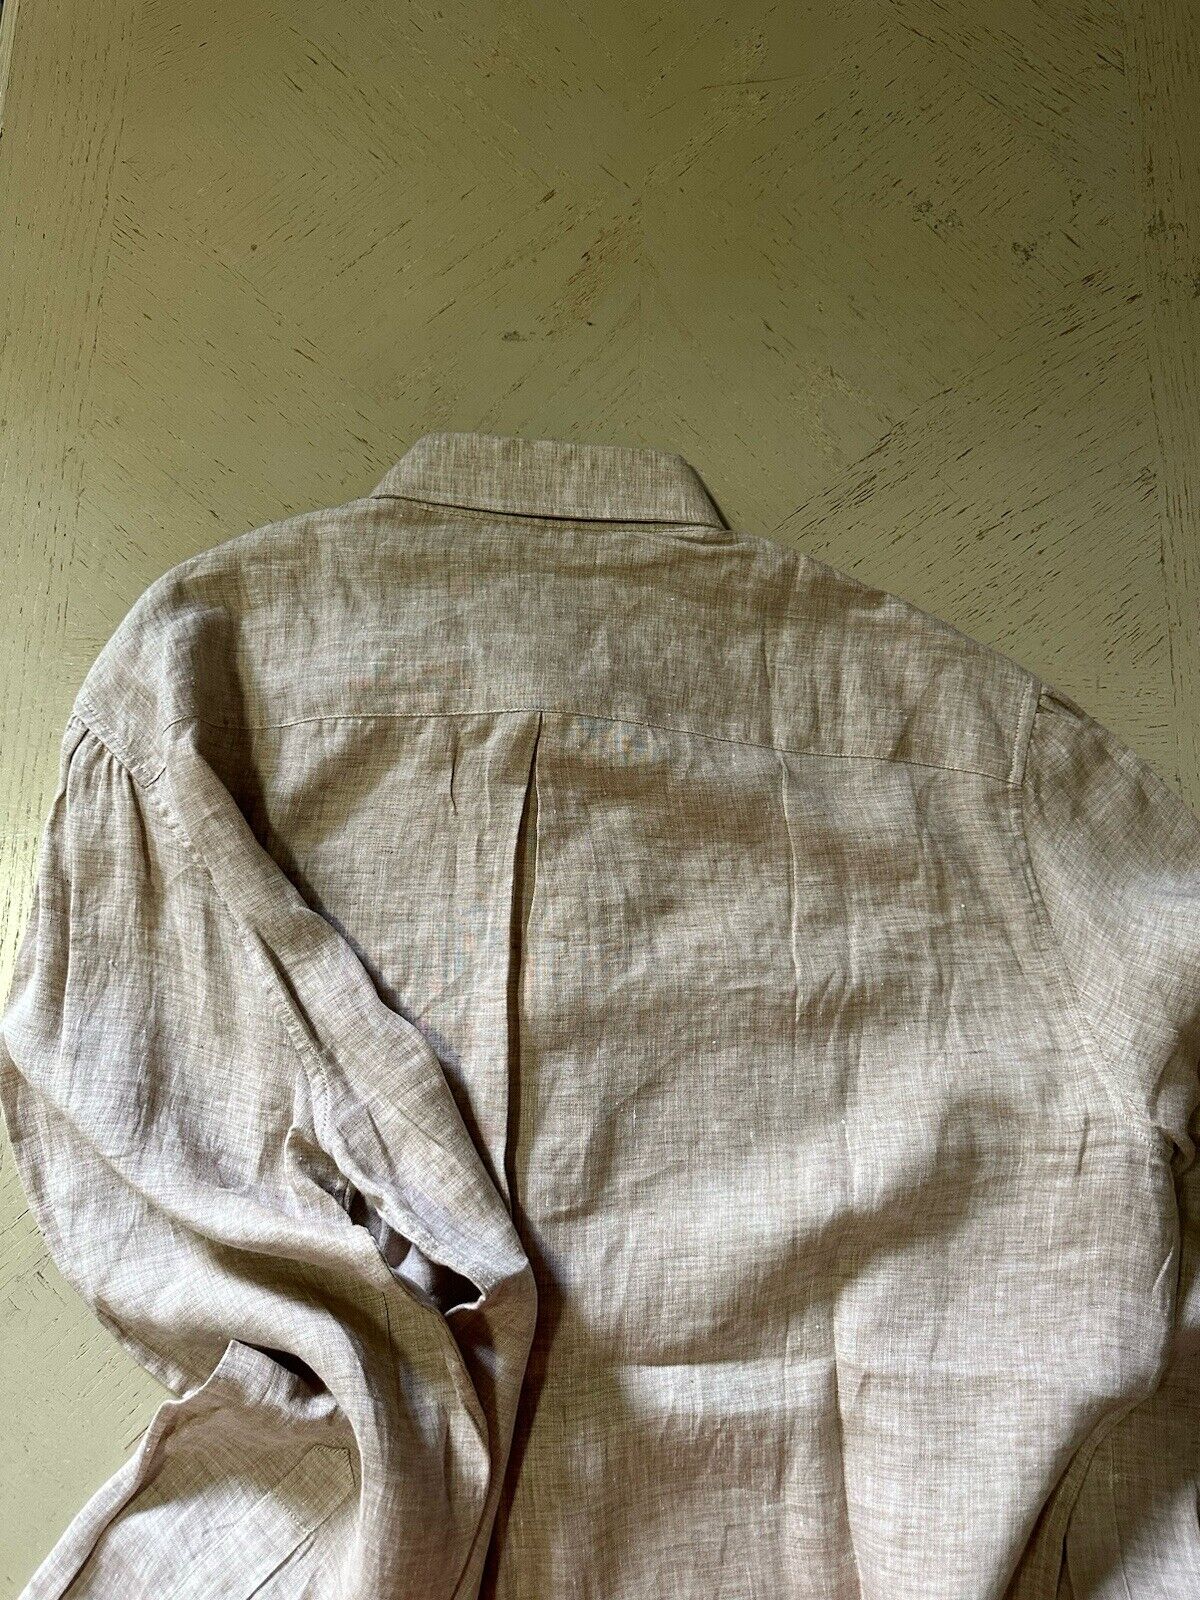 Brunello Cucinelli Men’s Button Down Linen Shirt LT Beige New $695